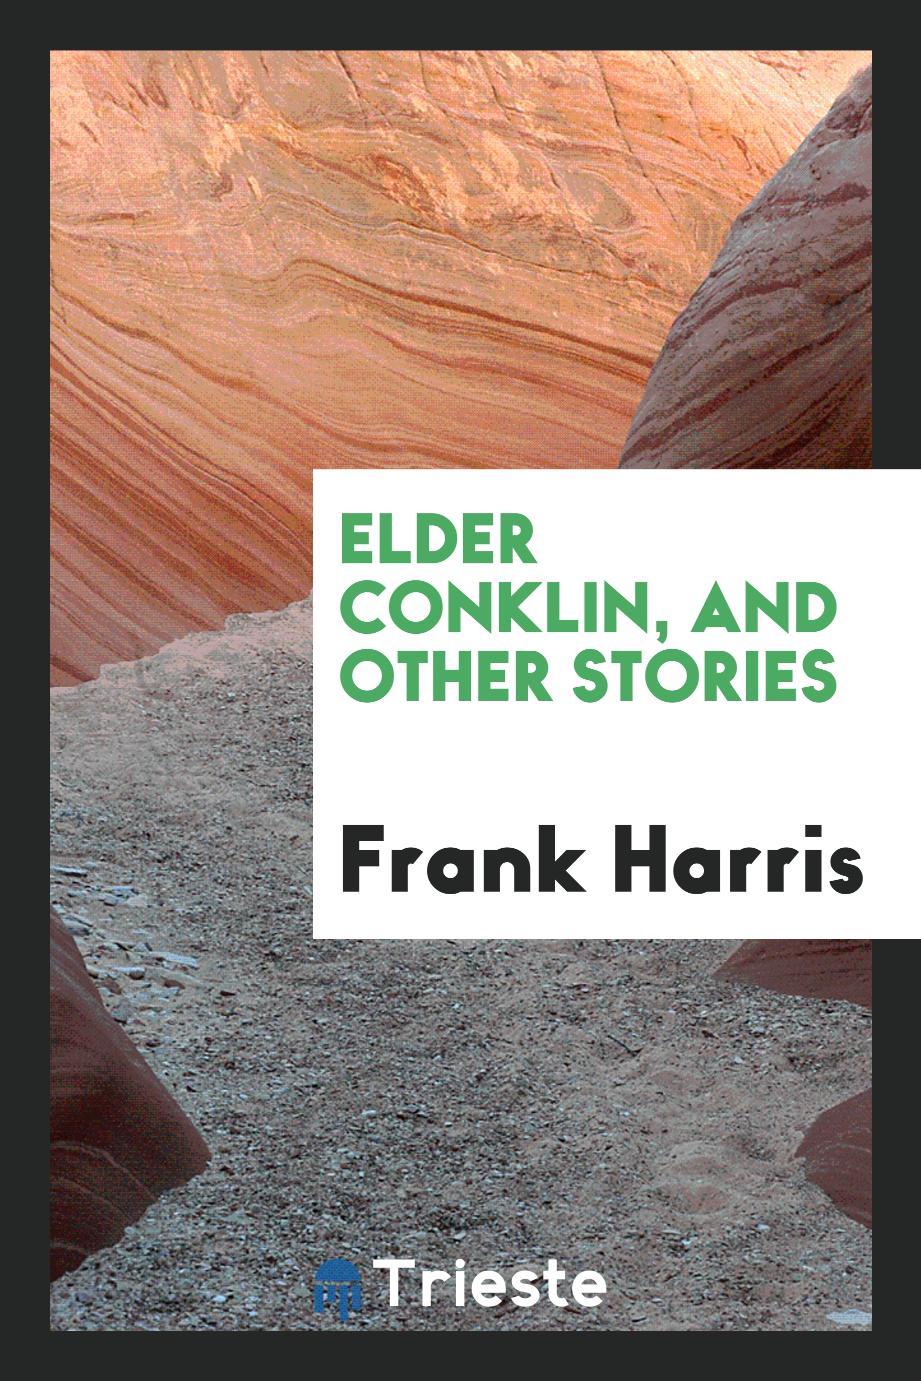 Frank Harris - Elder Conklin, and other stories